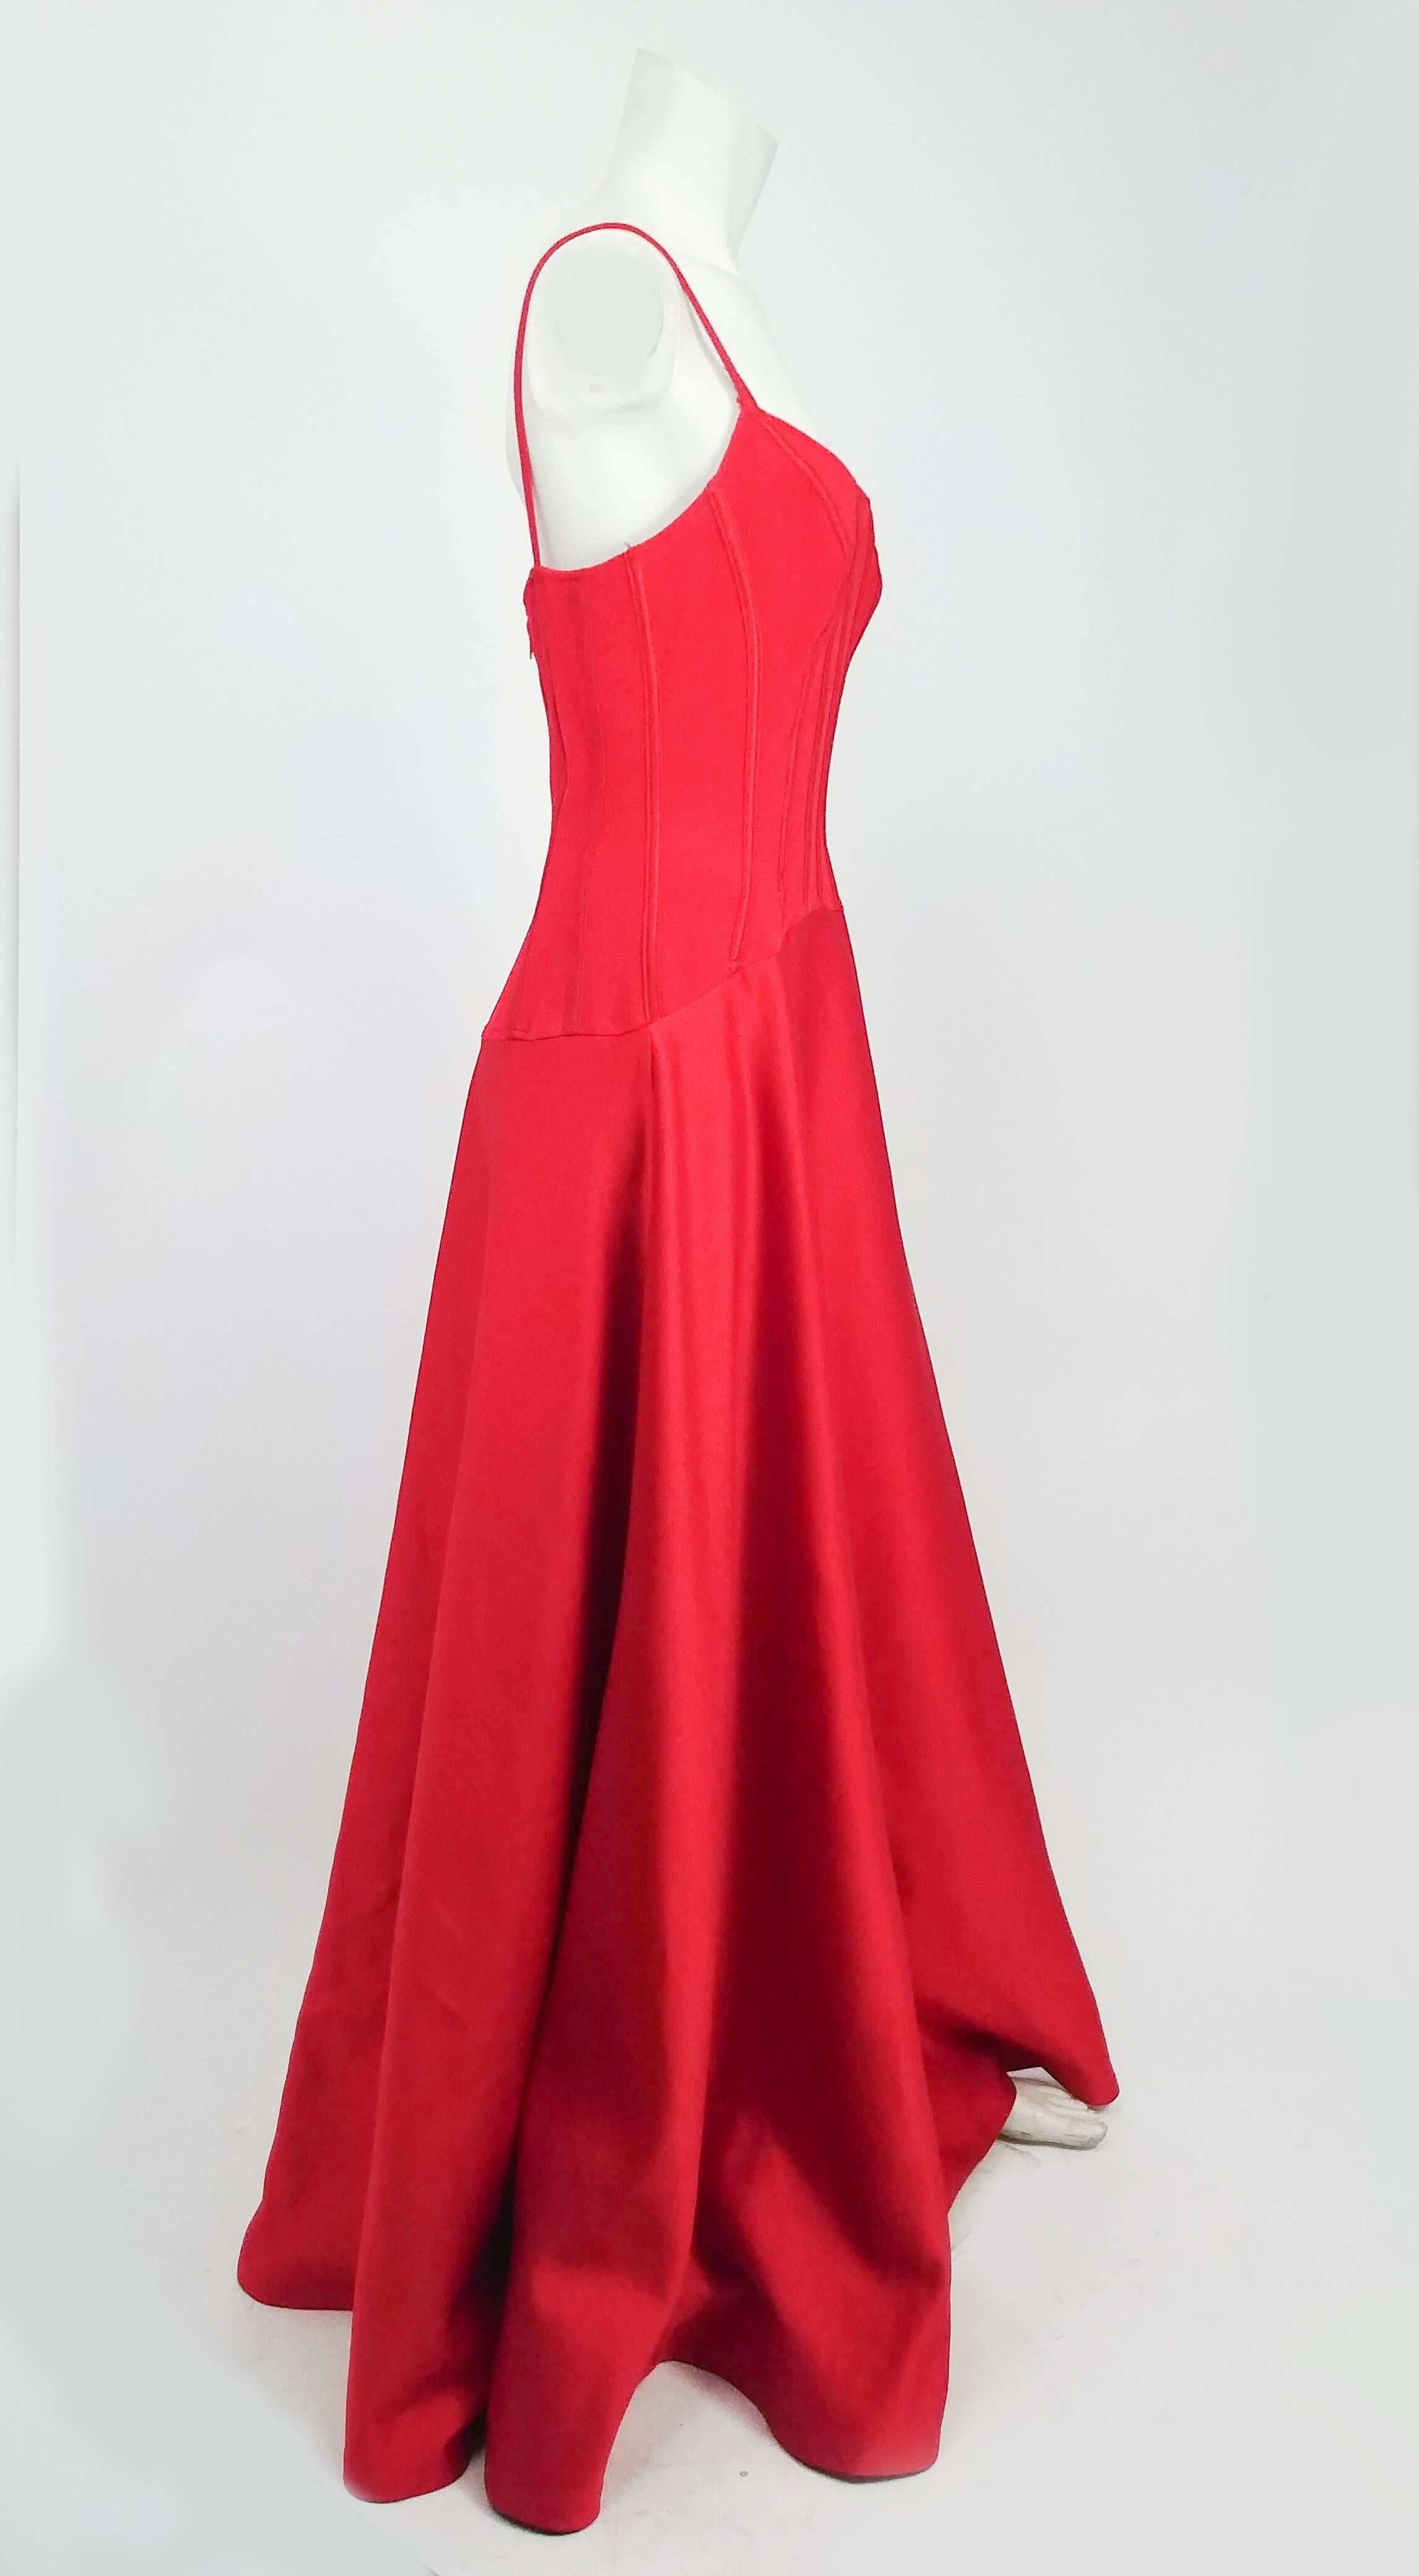 red corset top dress